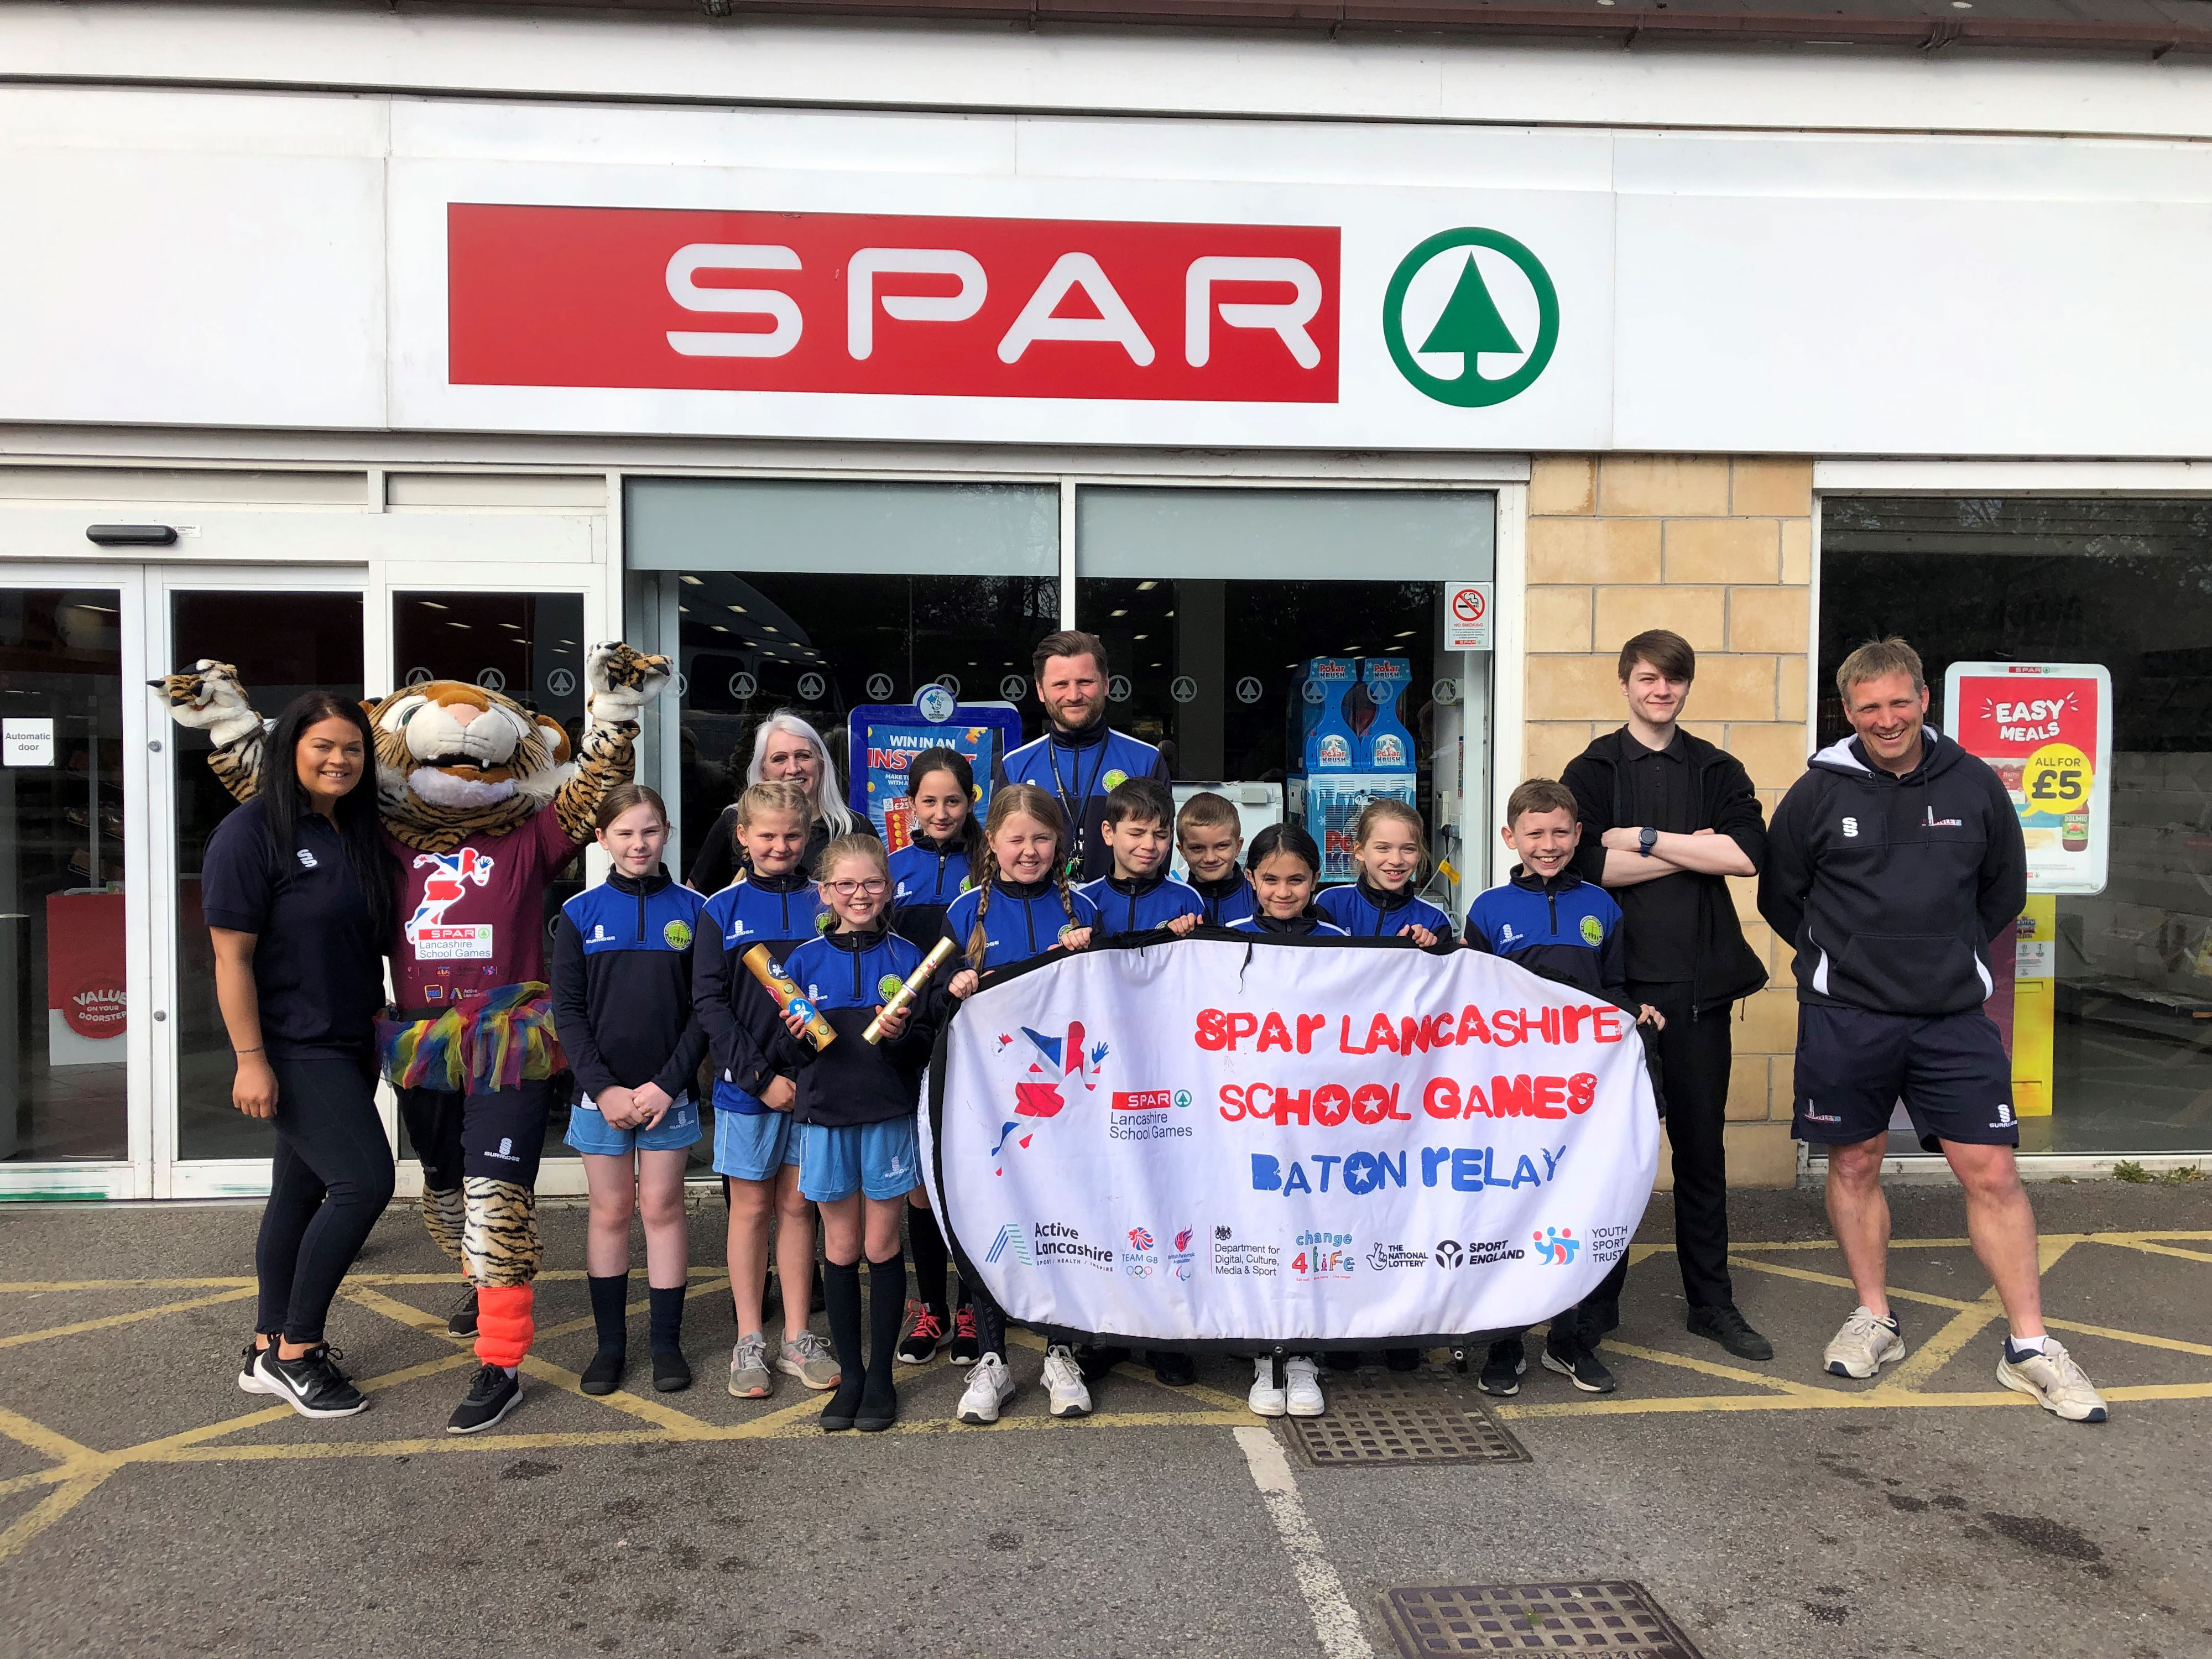 SPAR Lancashire School Games baton relay roars into Burnley